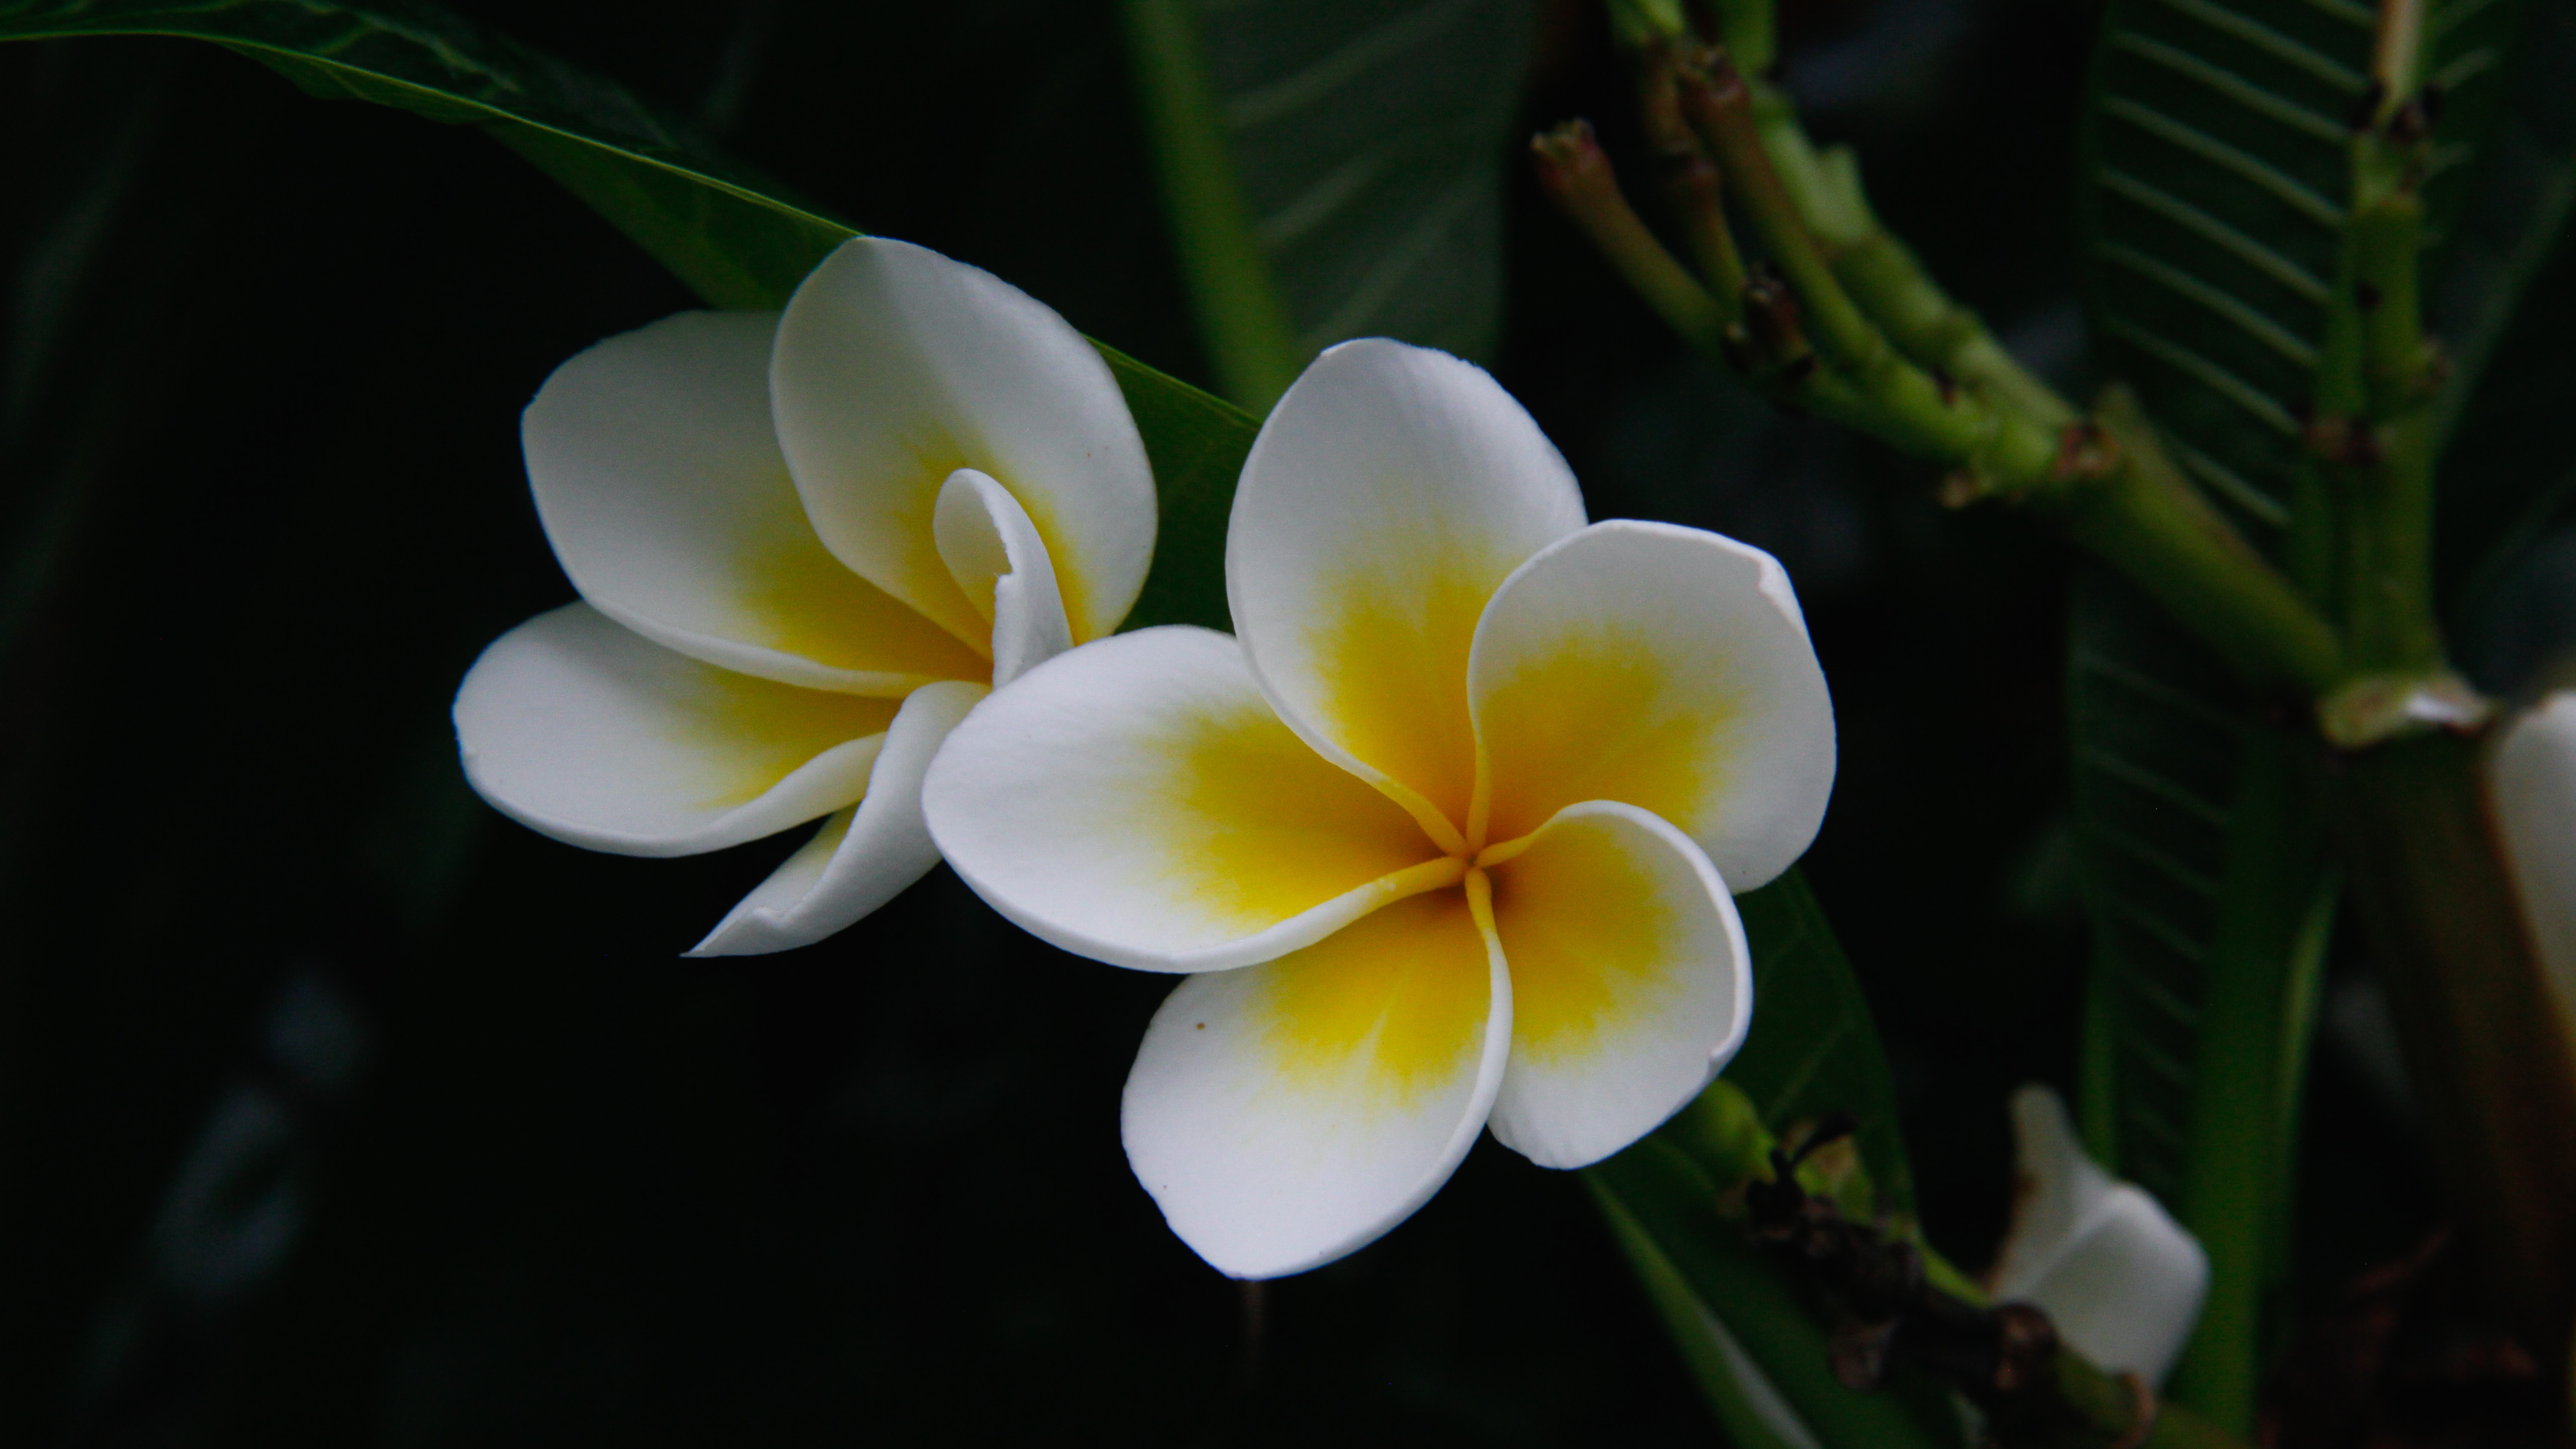 White and yellow plumeria flower